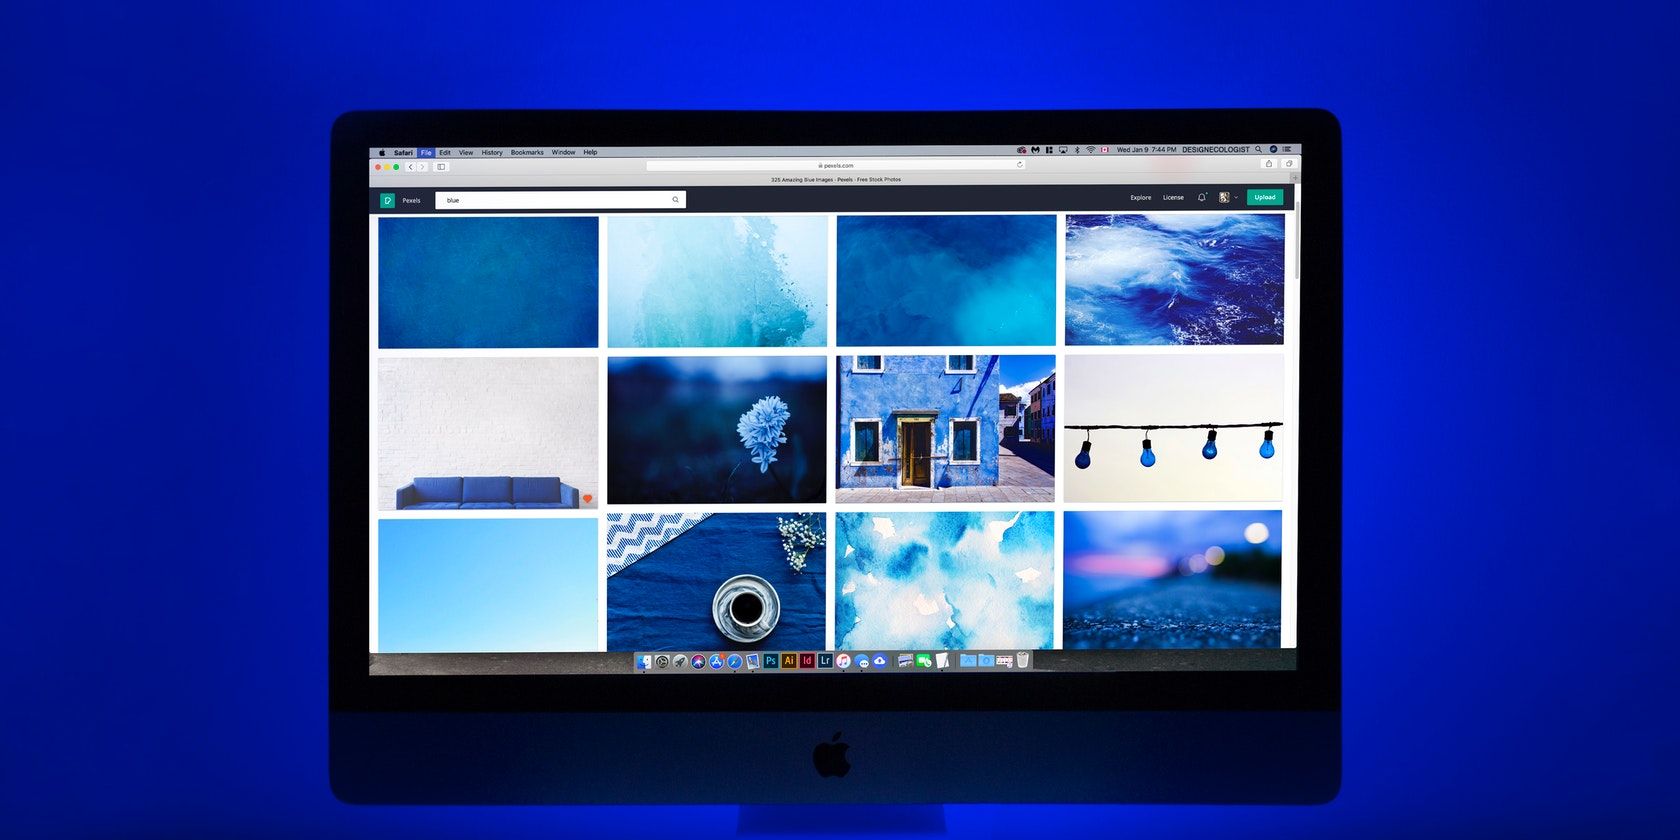 iMac screen with blue light